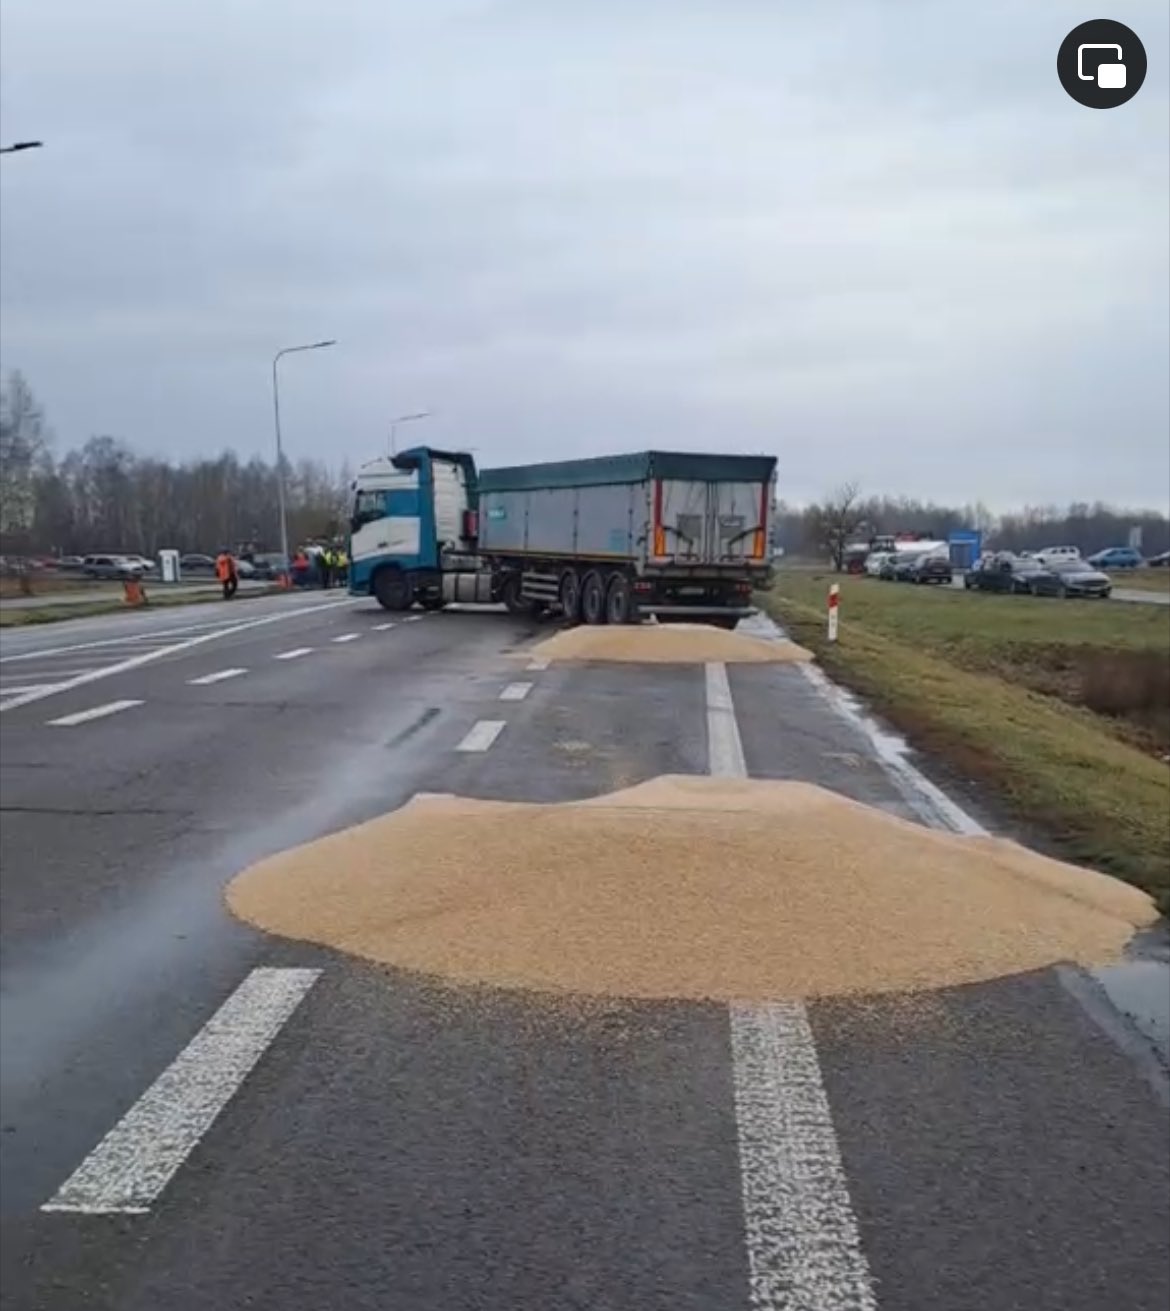 Poles dump grain from Ukrainian trucks near border amid new protests: reactions